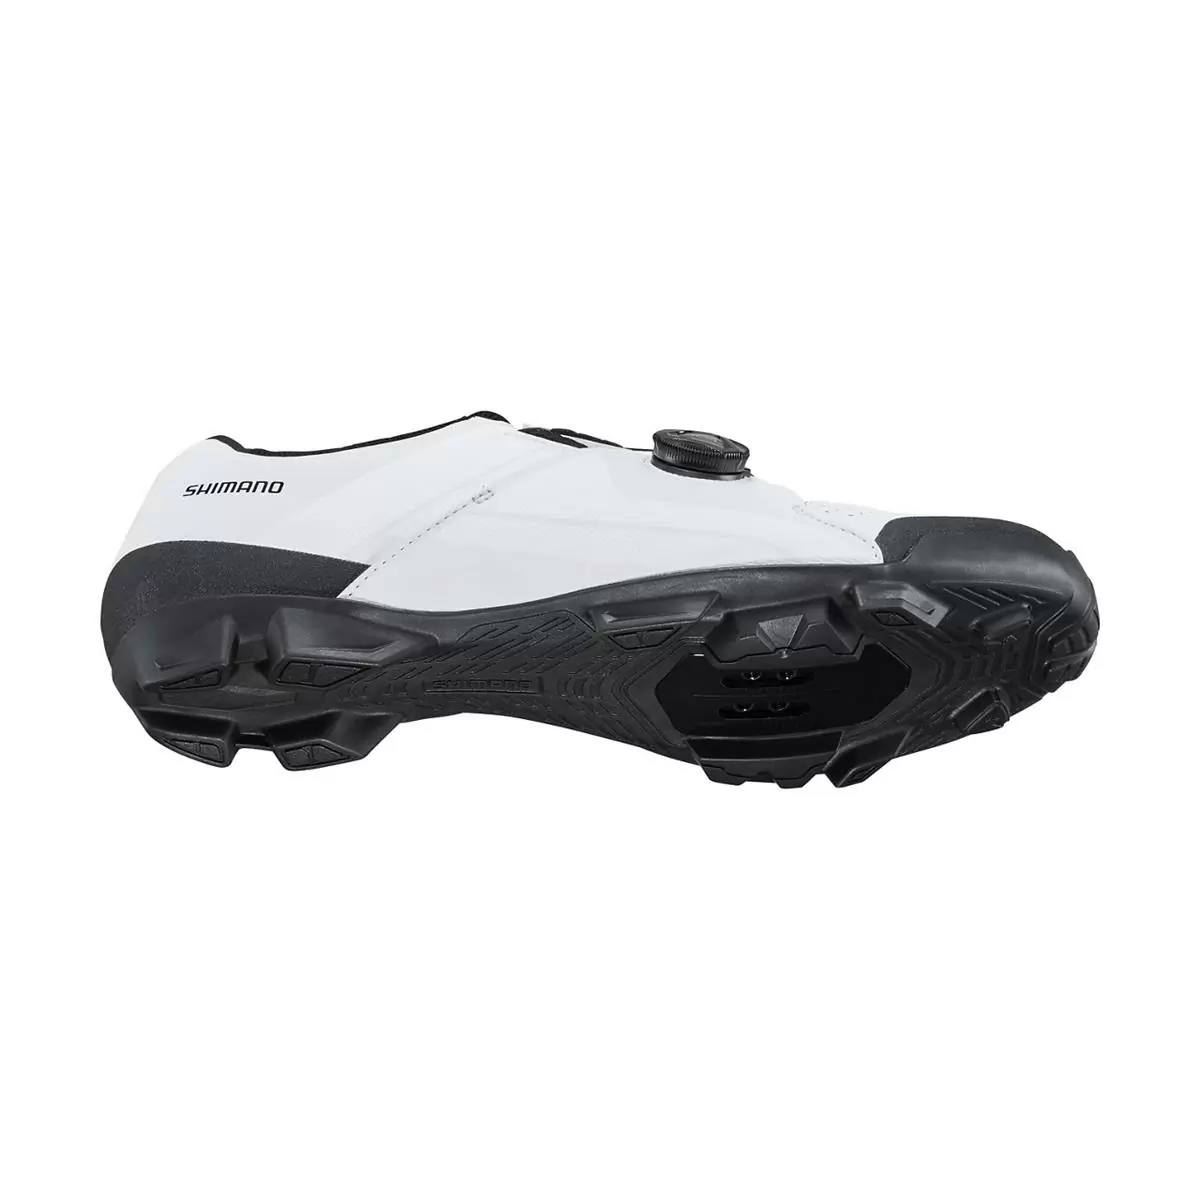 MTB Shoes XC3 SH-XC300 White Size 40 #1